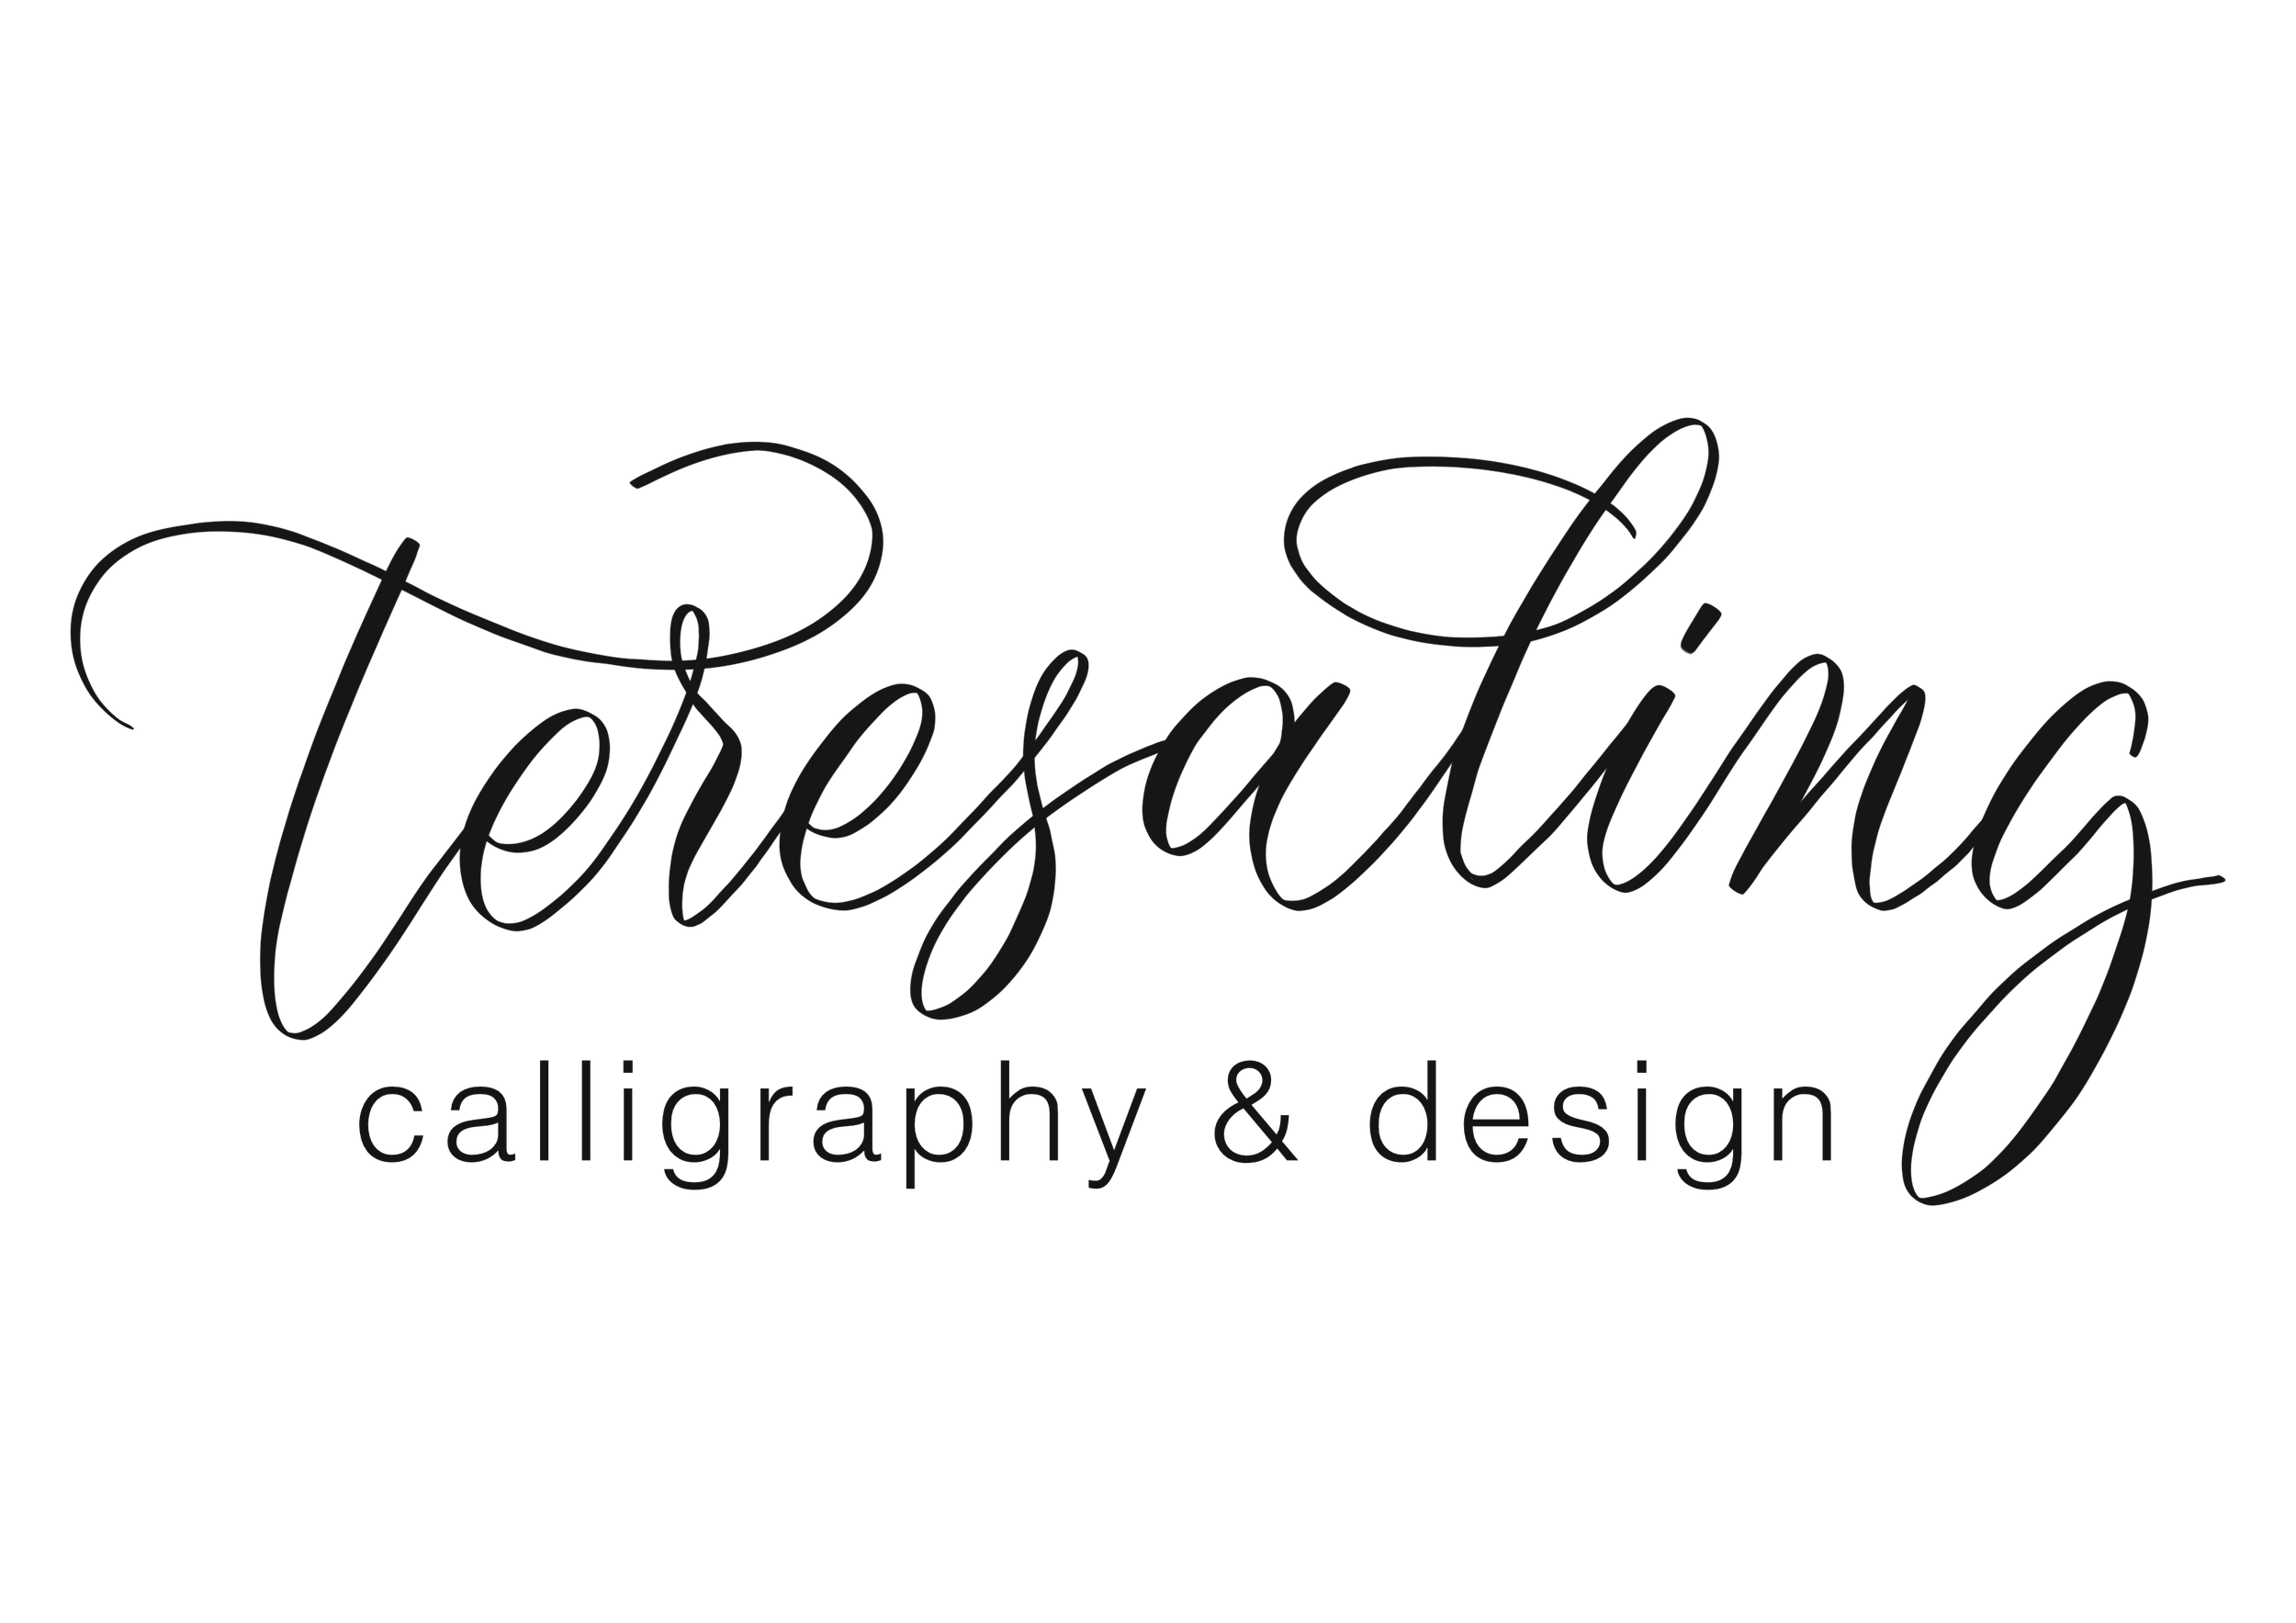 Teresaling Calligraphy | Sydney calligrapher